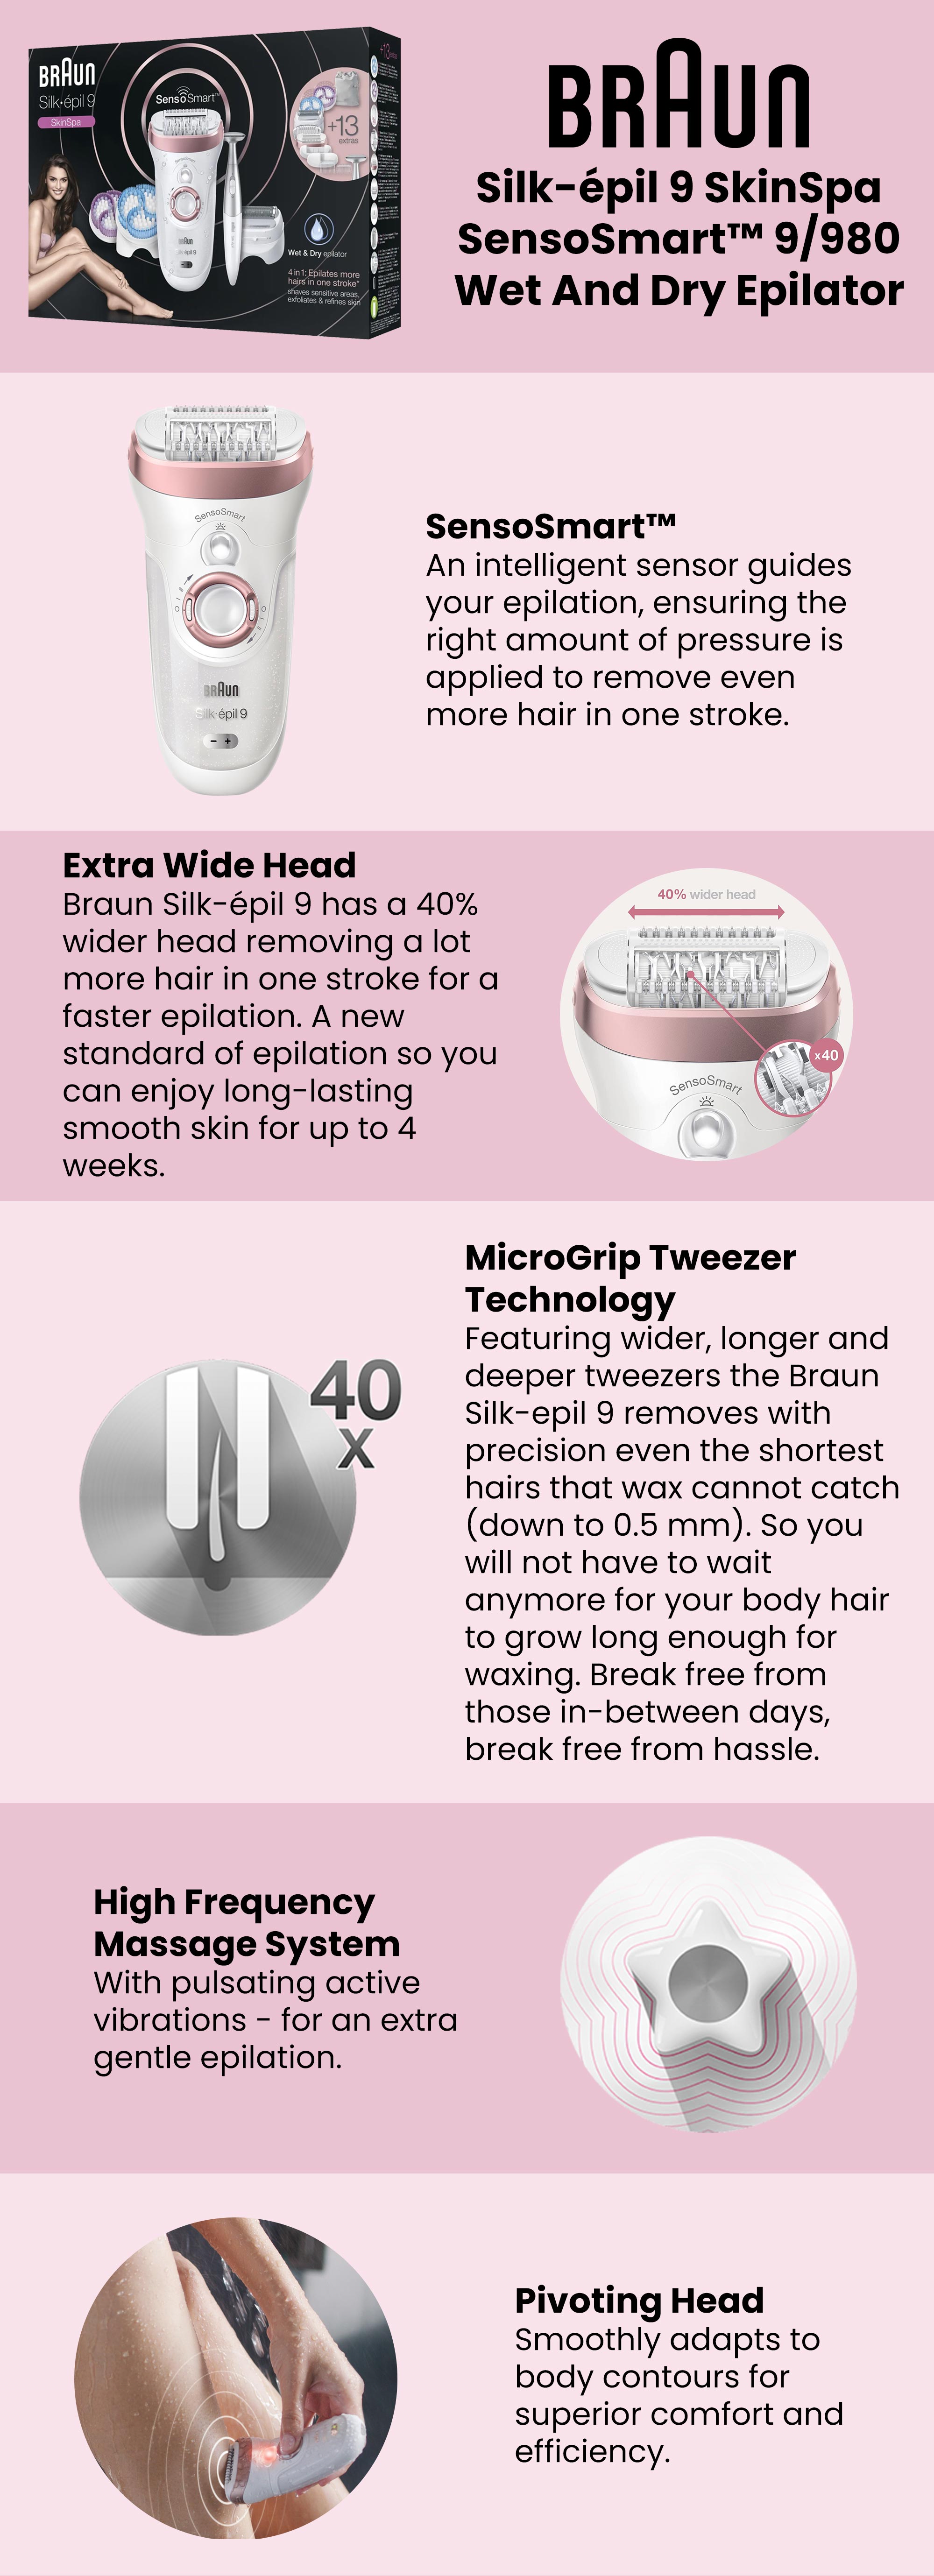 Epilator Braun 9-980 Silk-epil 9 SkinSpa Senso Smart Wet & Dry